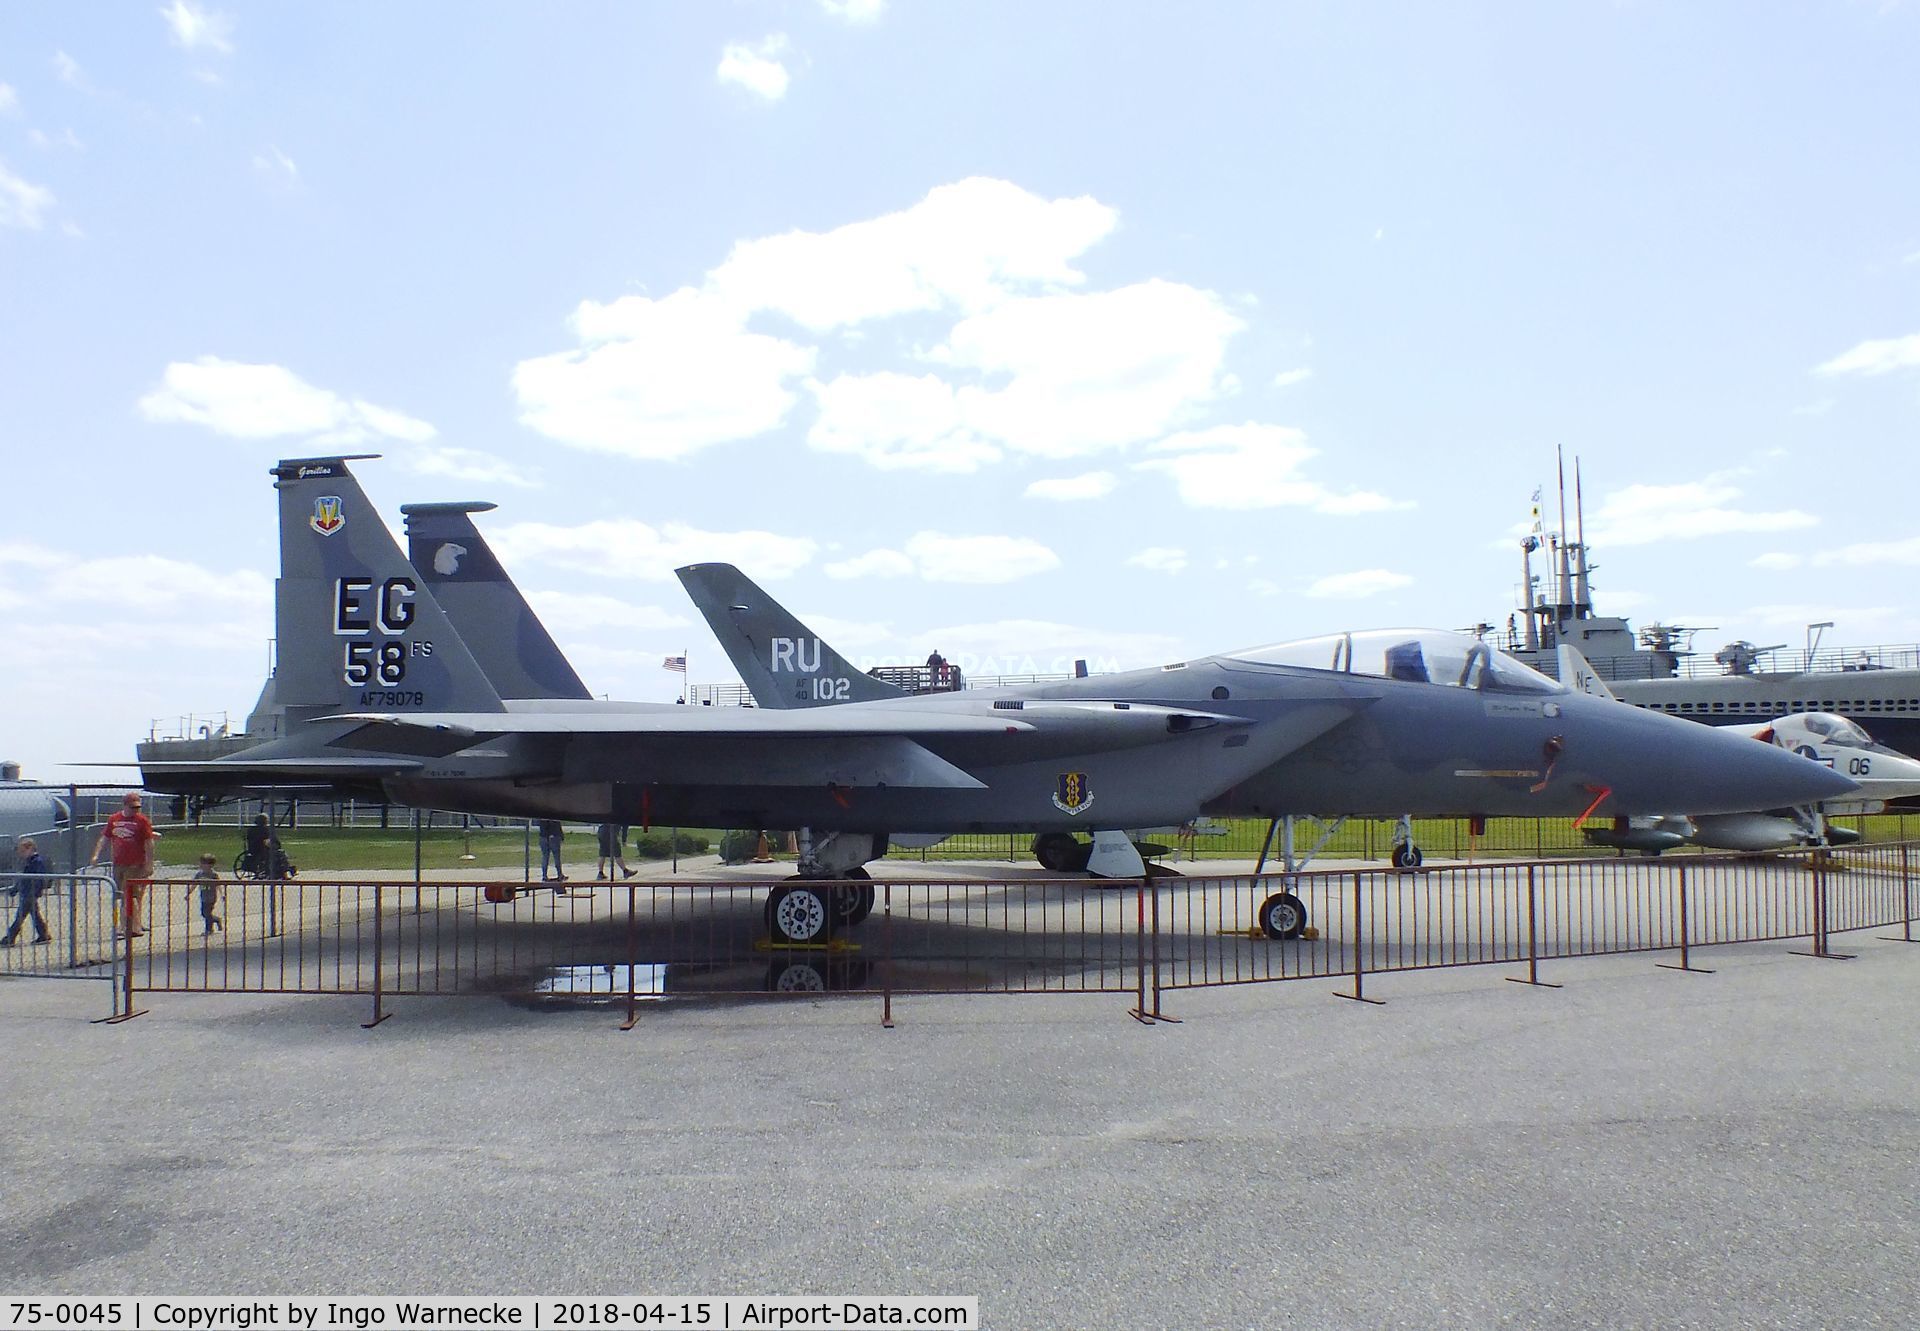 75-0045, 1975 McDonnell Douglas F-15A-13-MC Eagle C/N 145/A125, McDonnell Douglas F-15A Eagle at the USS Alabama Battleship Memorial Park, Mobile AL